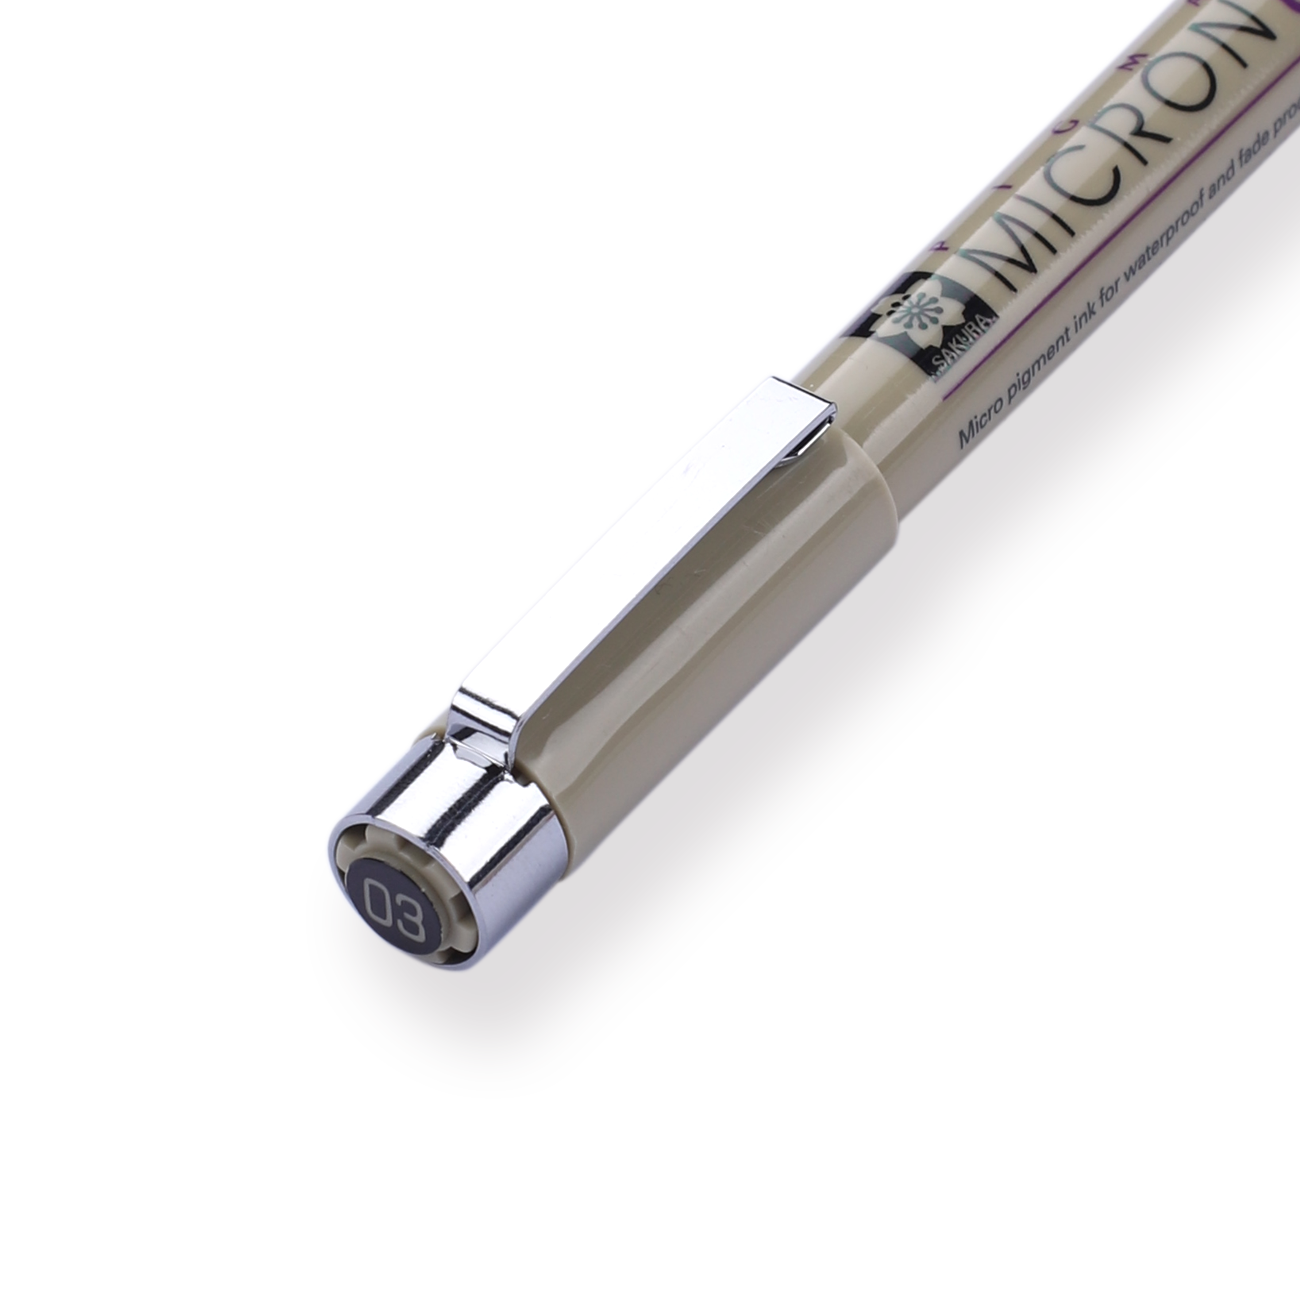 Sakura Pigma Micron Pen 02 - 0.30 mm - Black — Stationery Pal